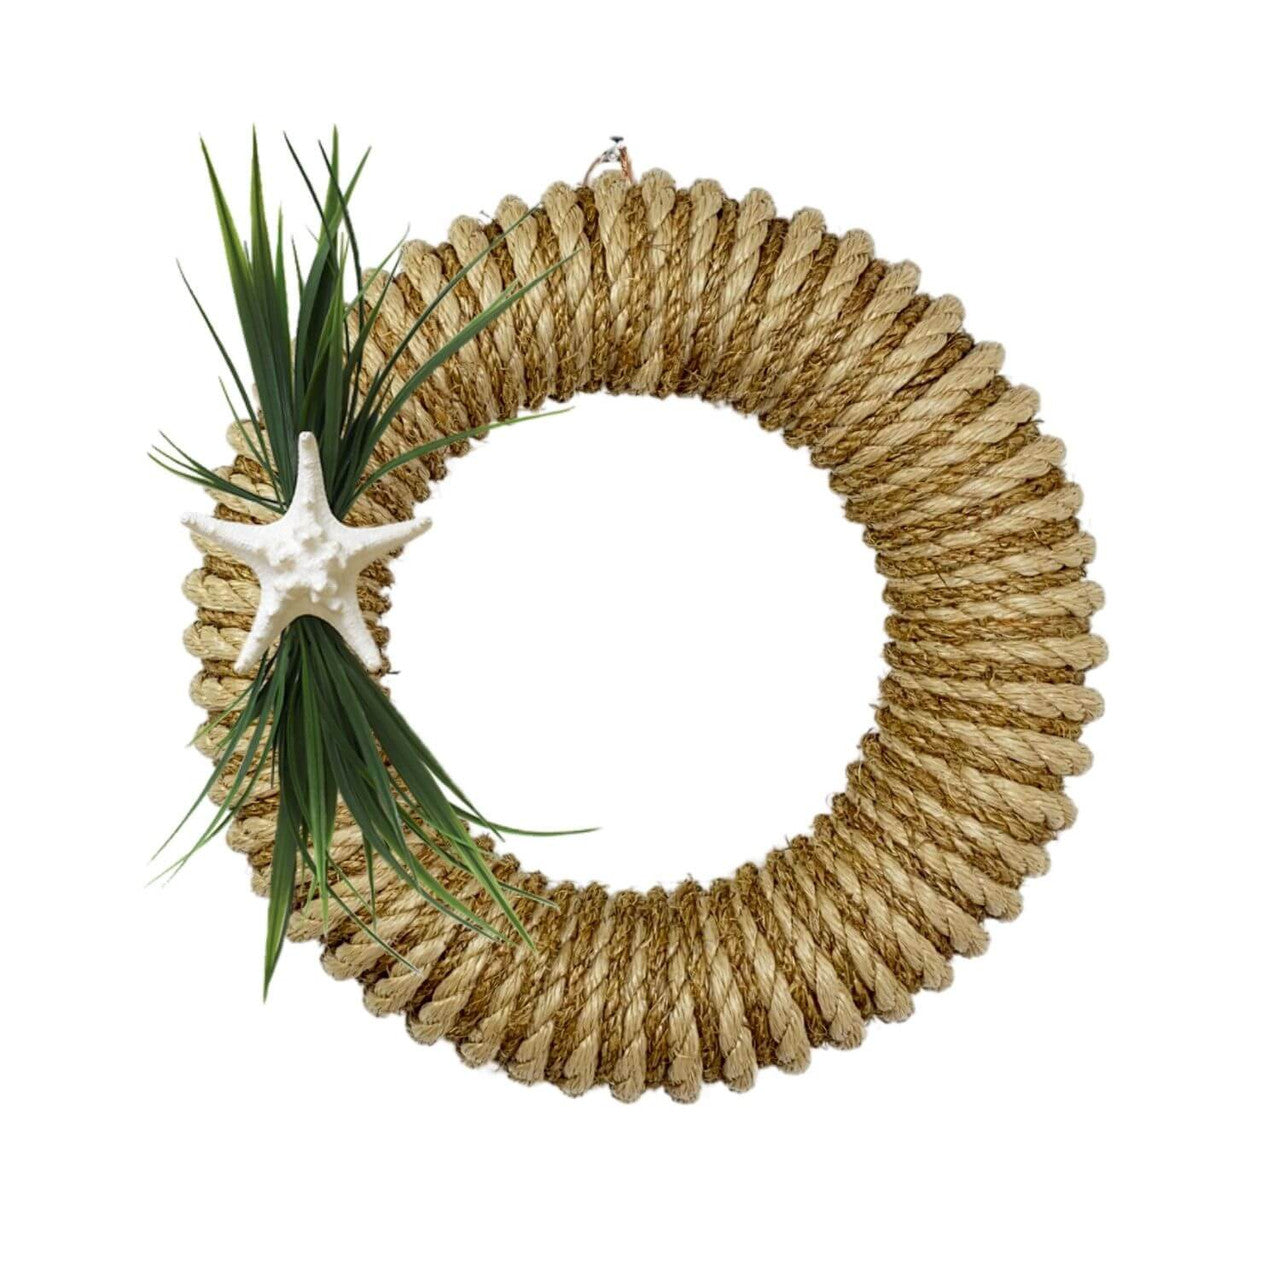 The Hampton Rope Wreath - One Wreath For All Seasons